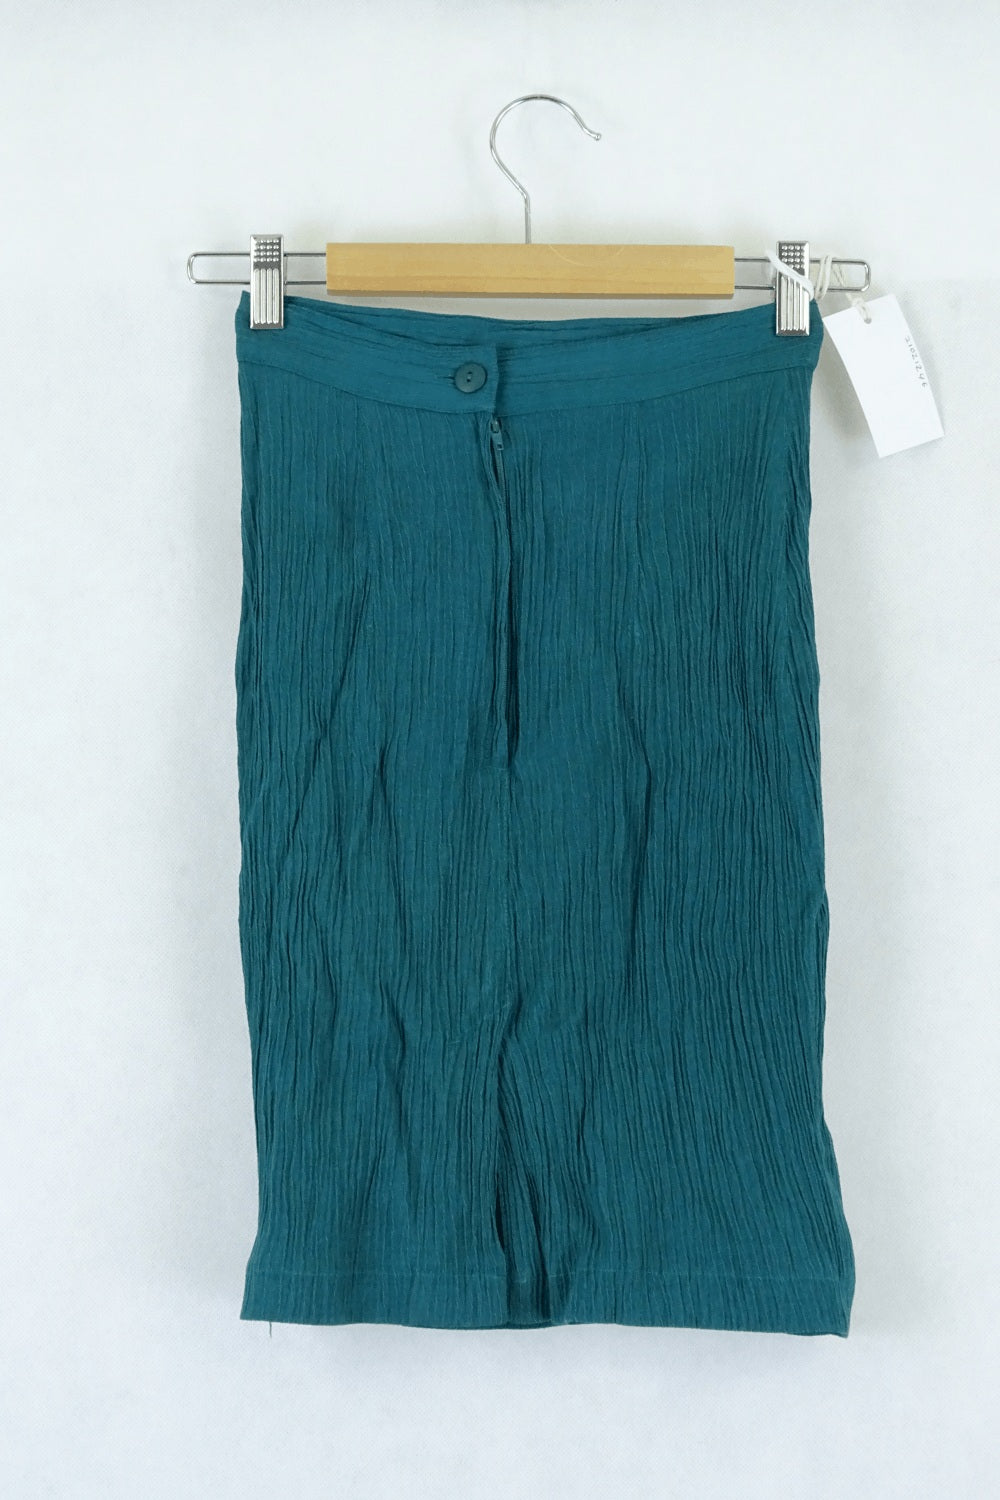 Cue Green Vintage Skirt 8